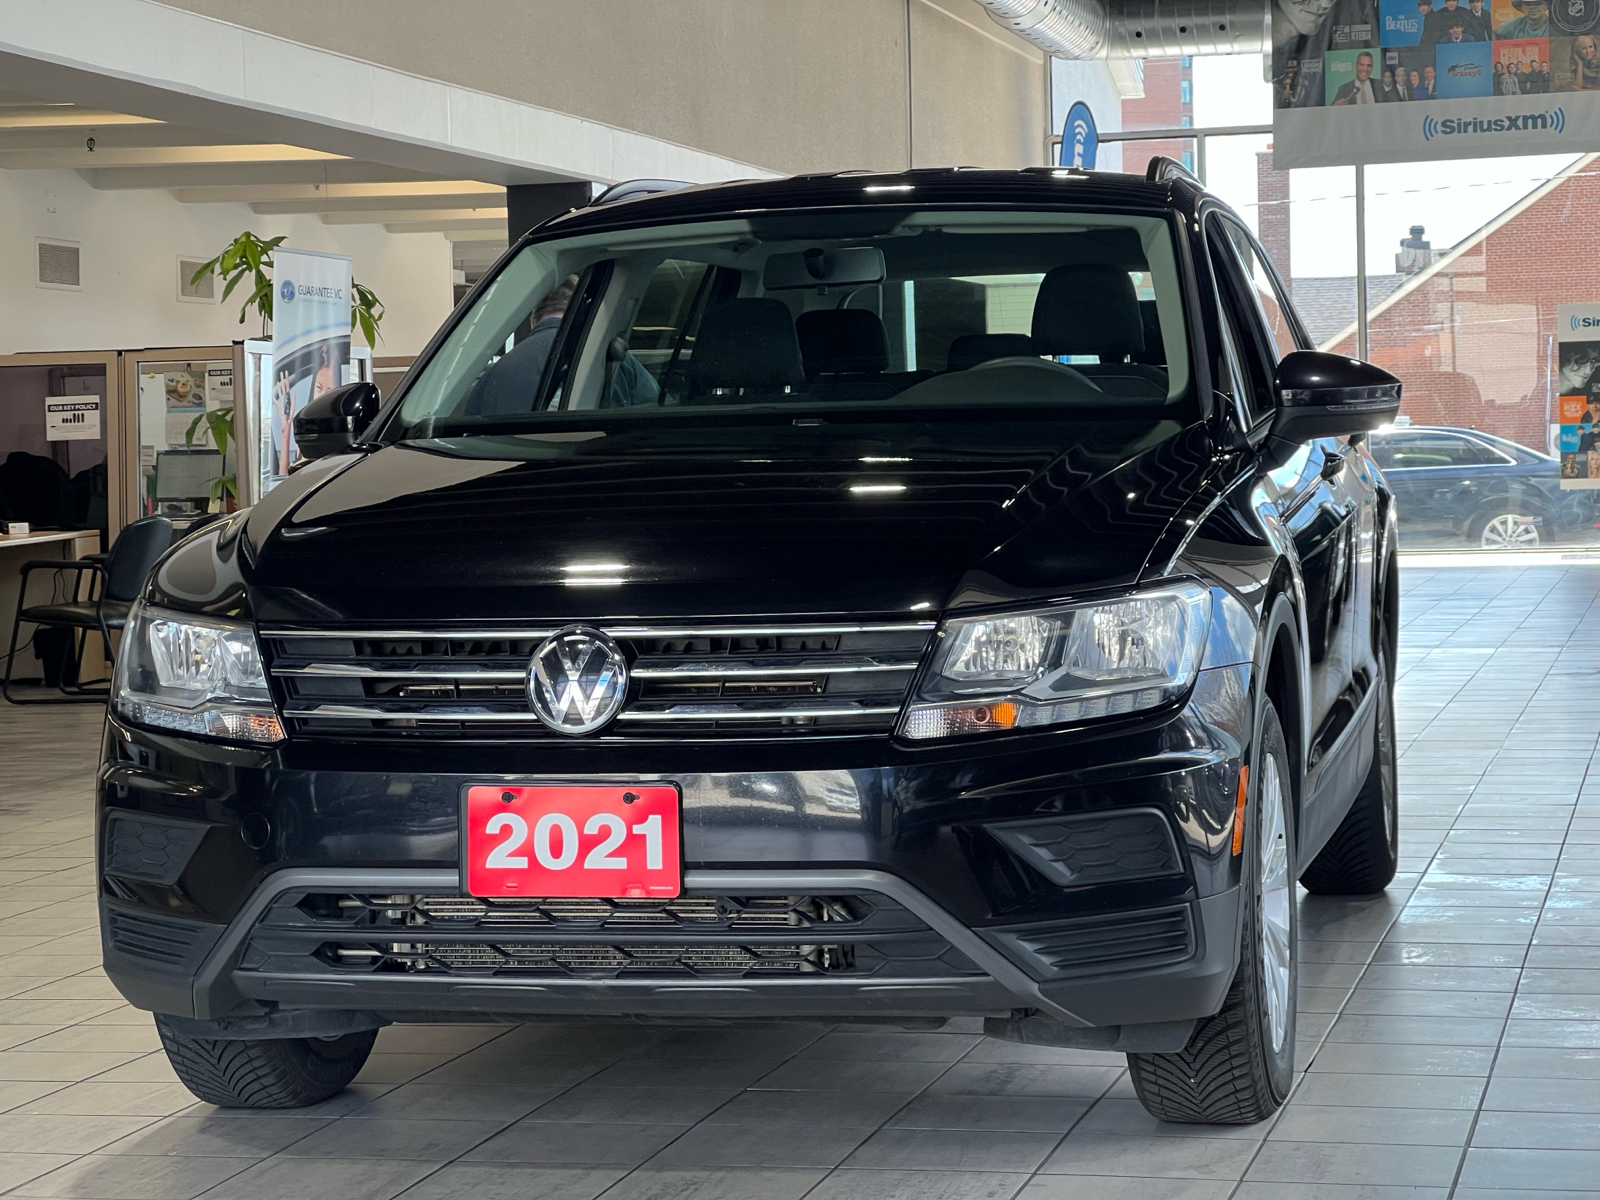 2021 Volkswagen Tiguan Trendline - 4Motion - AWD - No Accidents - Apple C